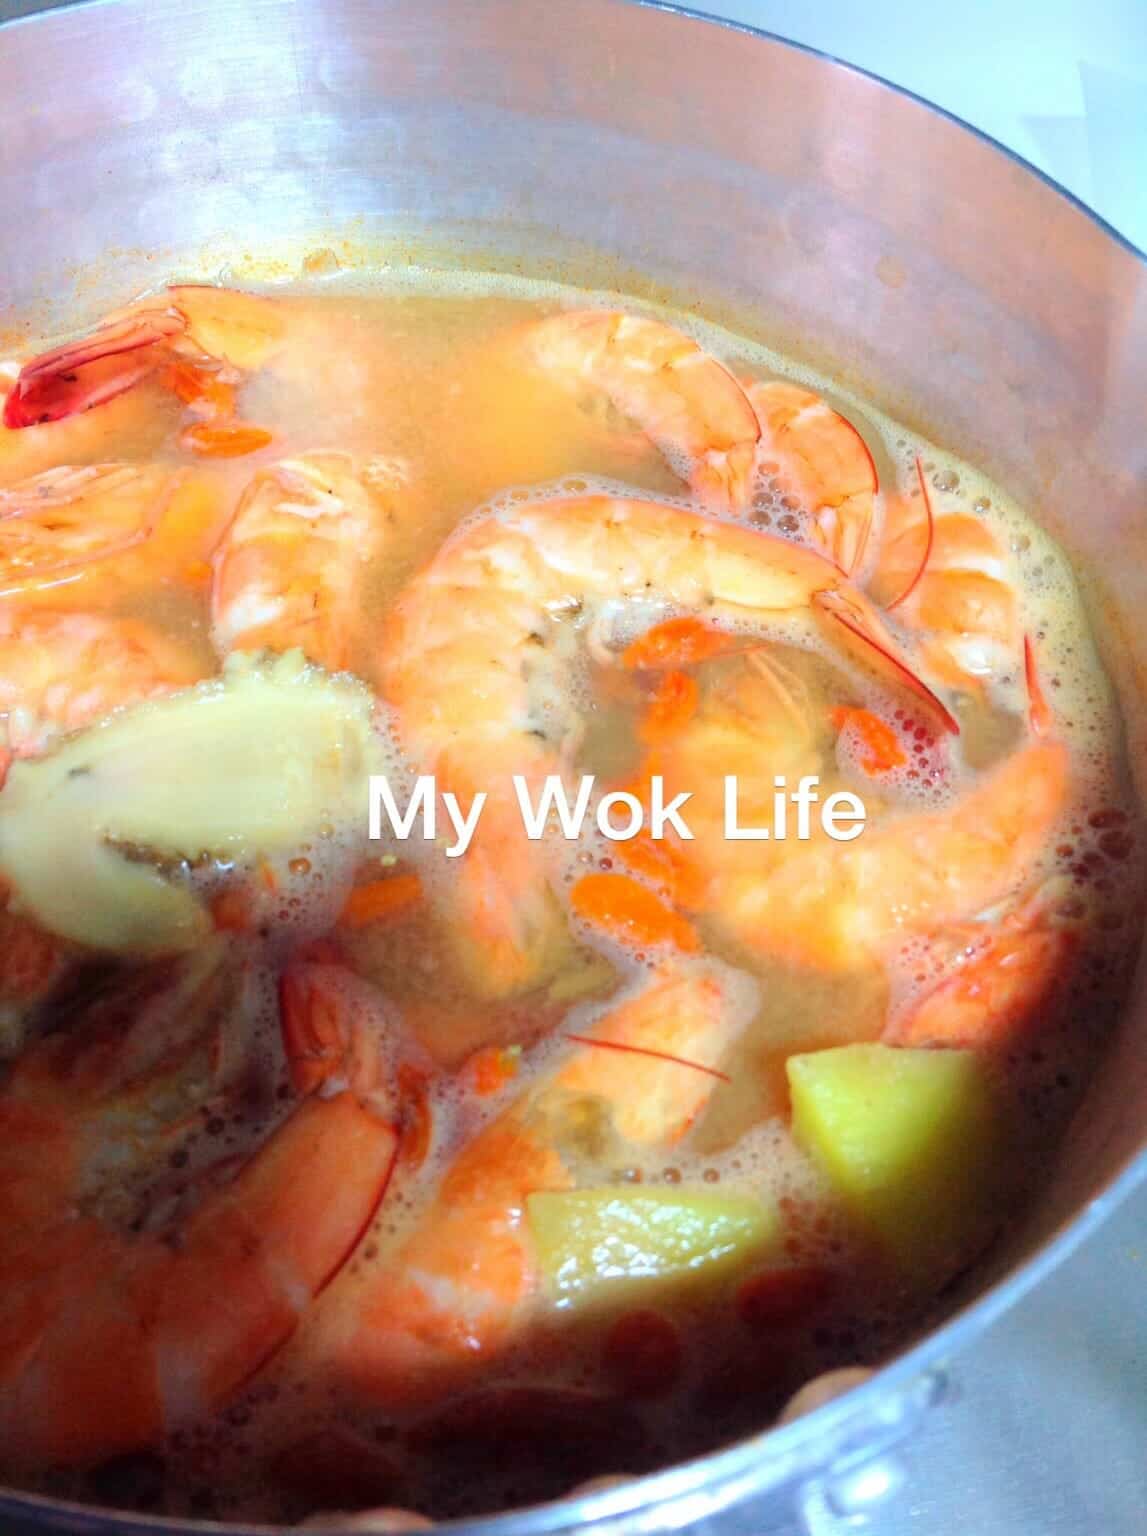 My Wok Life Cooking Blog - "Dong Quai" Prawn -